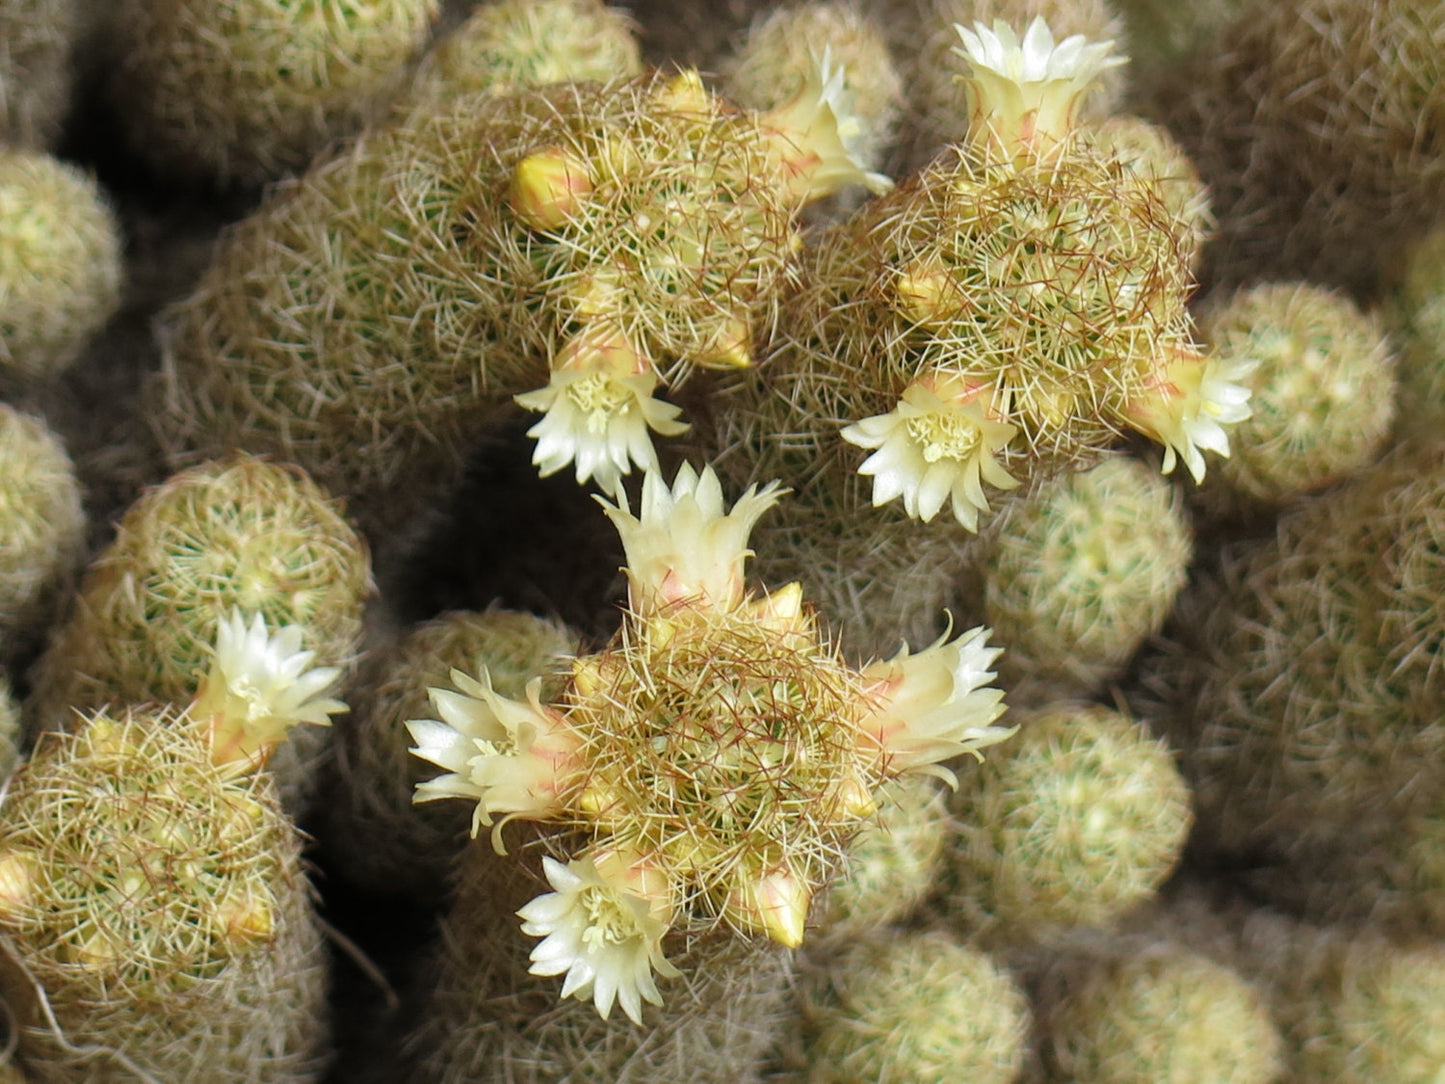 Mammillaria Elongata * Lady Finger Cactus * Royal Gold Lace Cacti Rare * 20 SEEDS